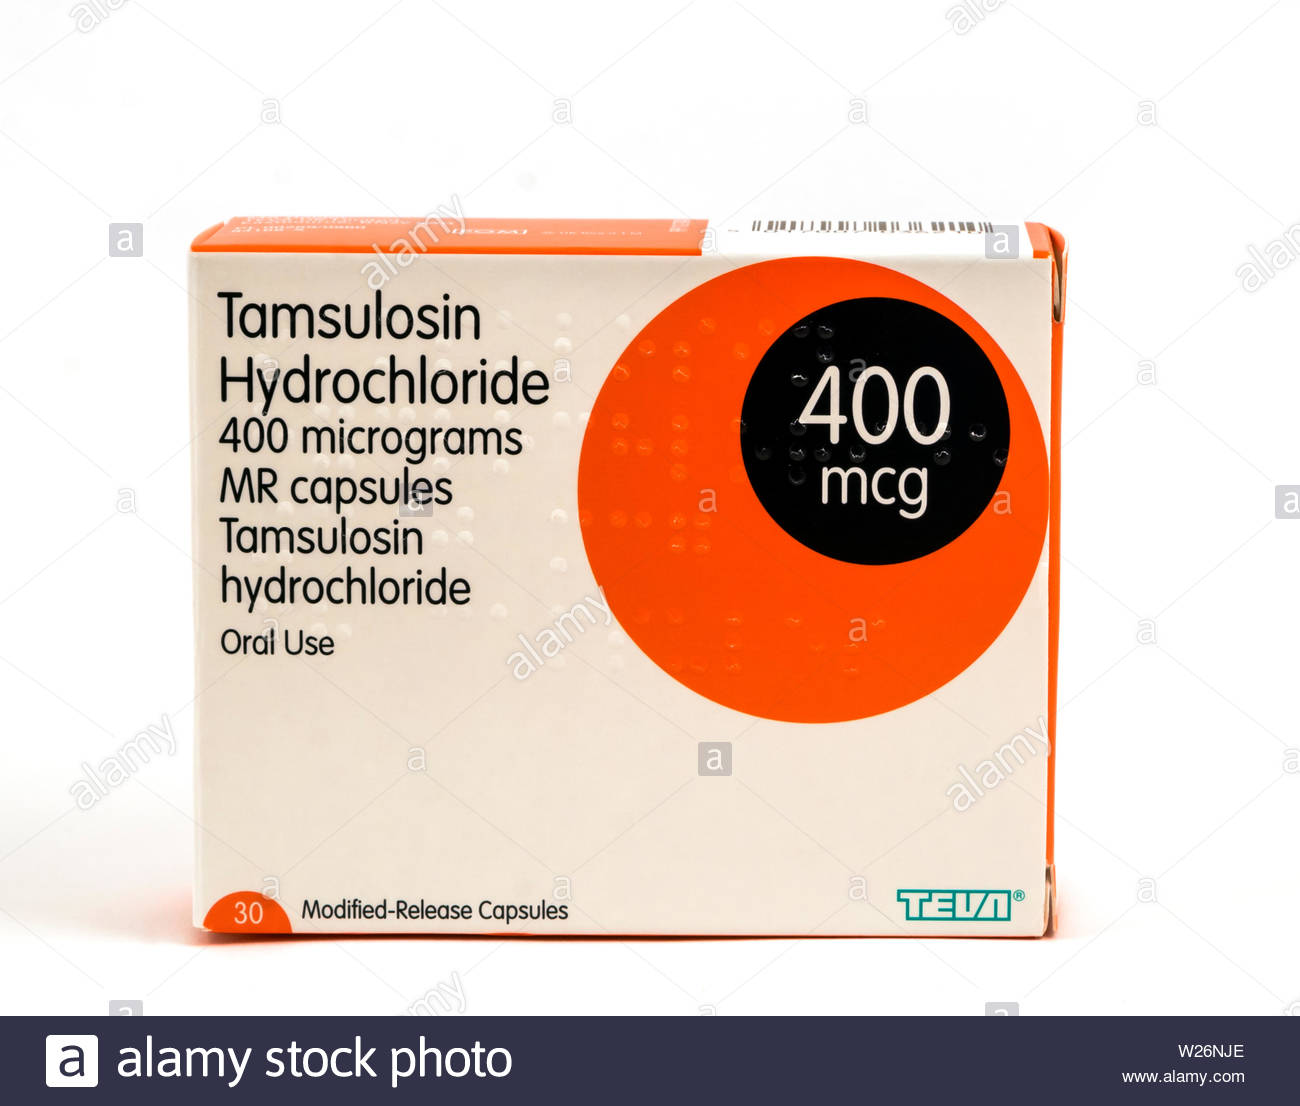 Tamsulosin Hydrochloride 400Mcg – Pharmacy